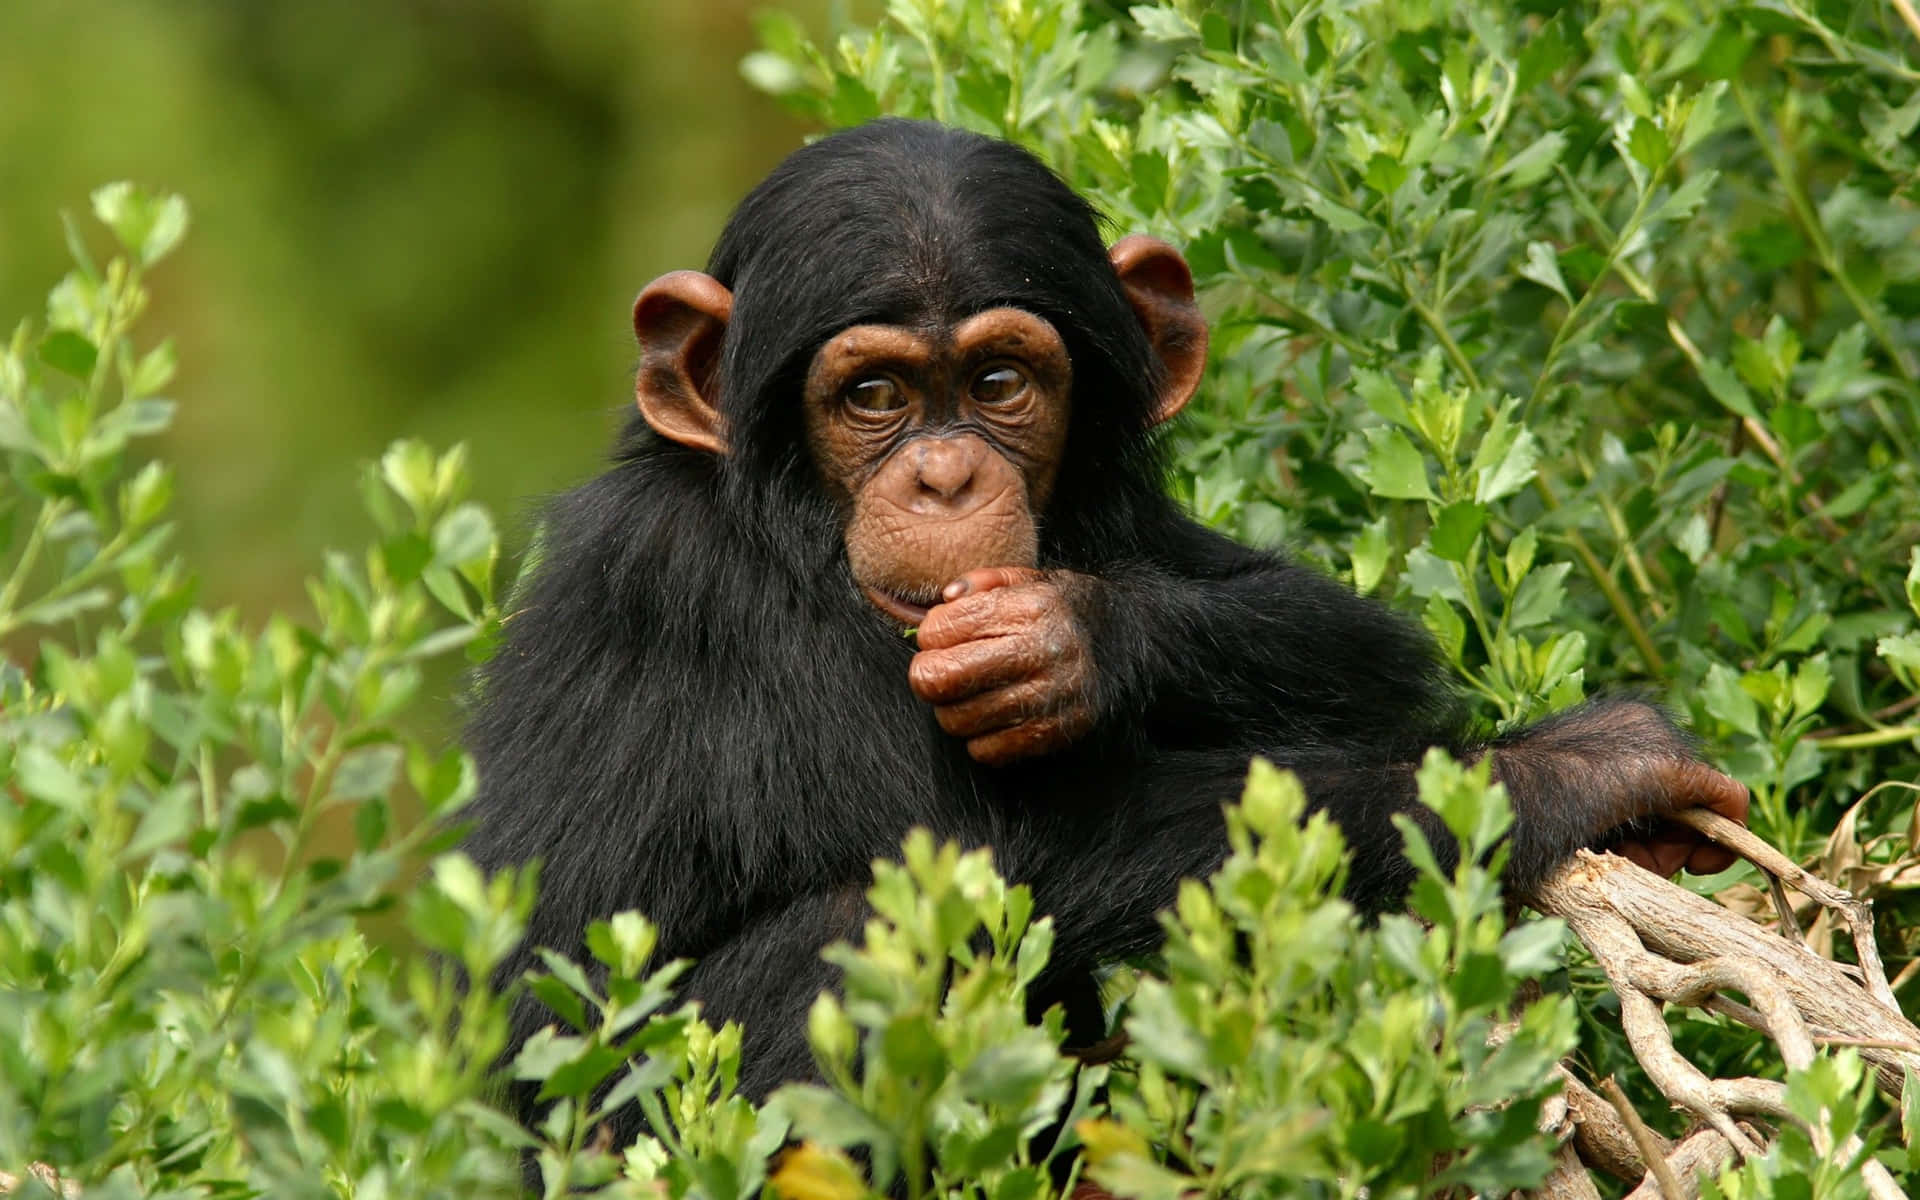 A Close-Up of a Chimpanzee